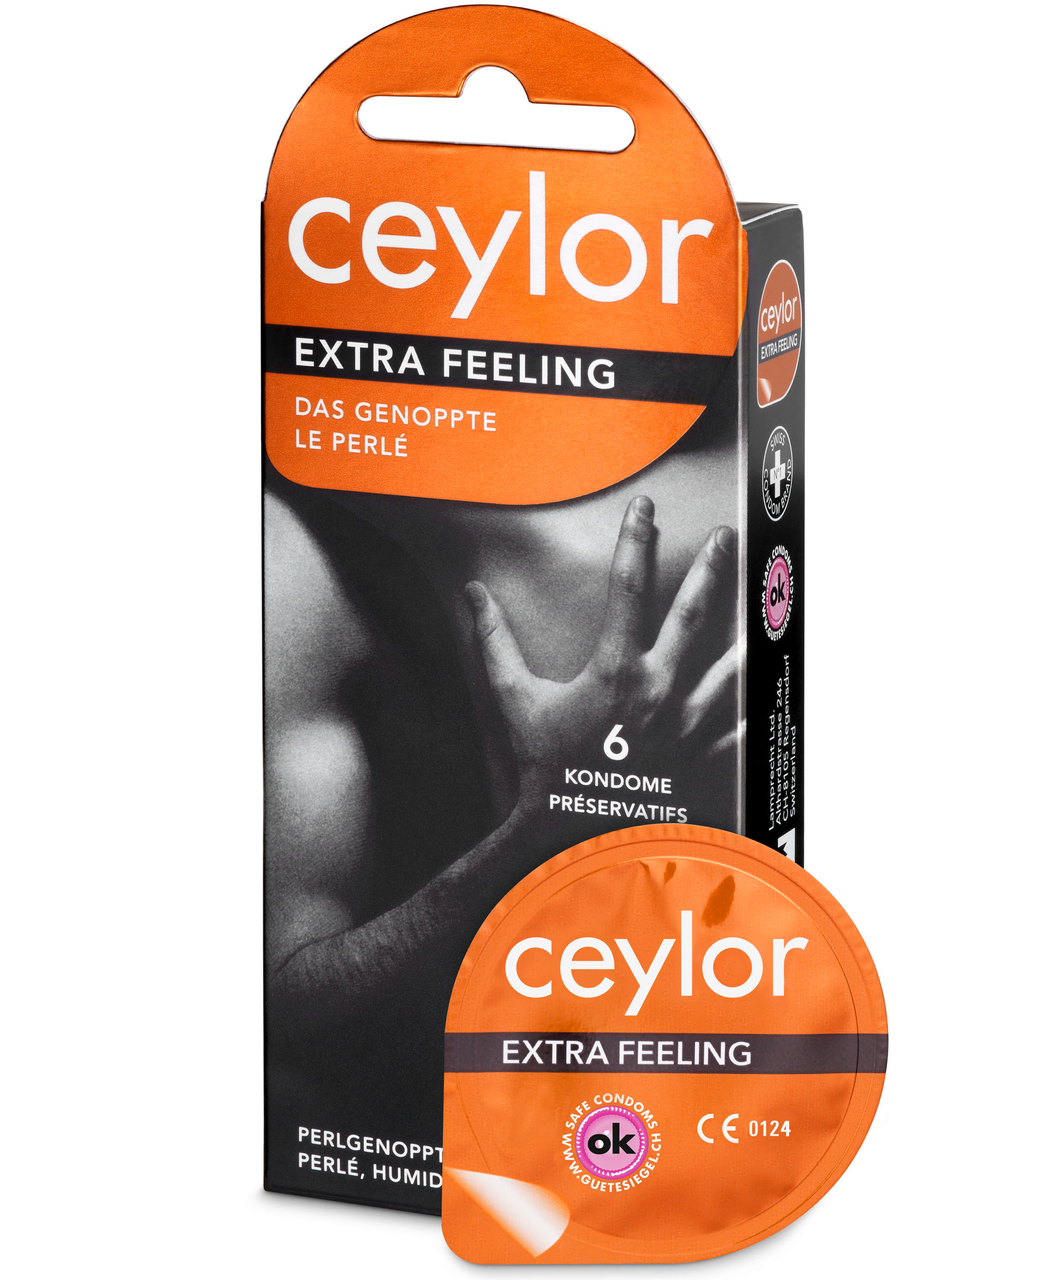 Ceylor Extra Feeling презервативы (6 шт.)